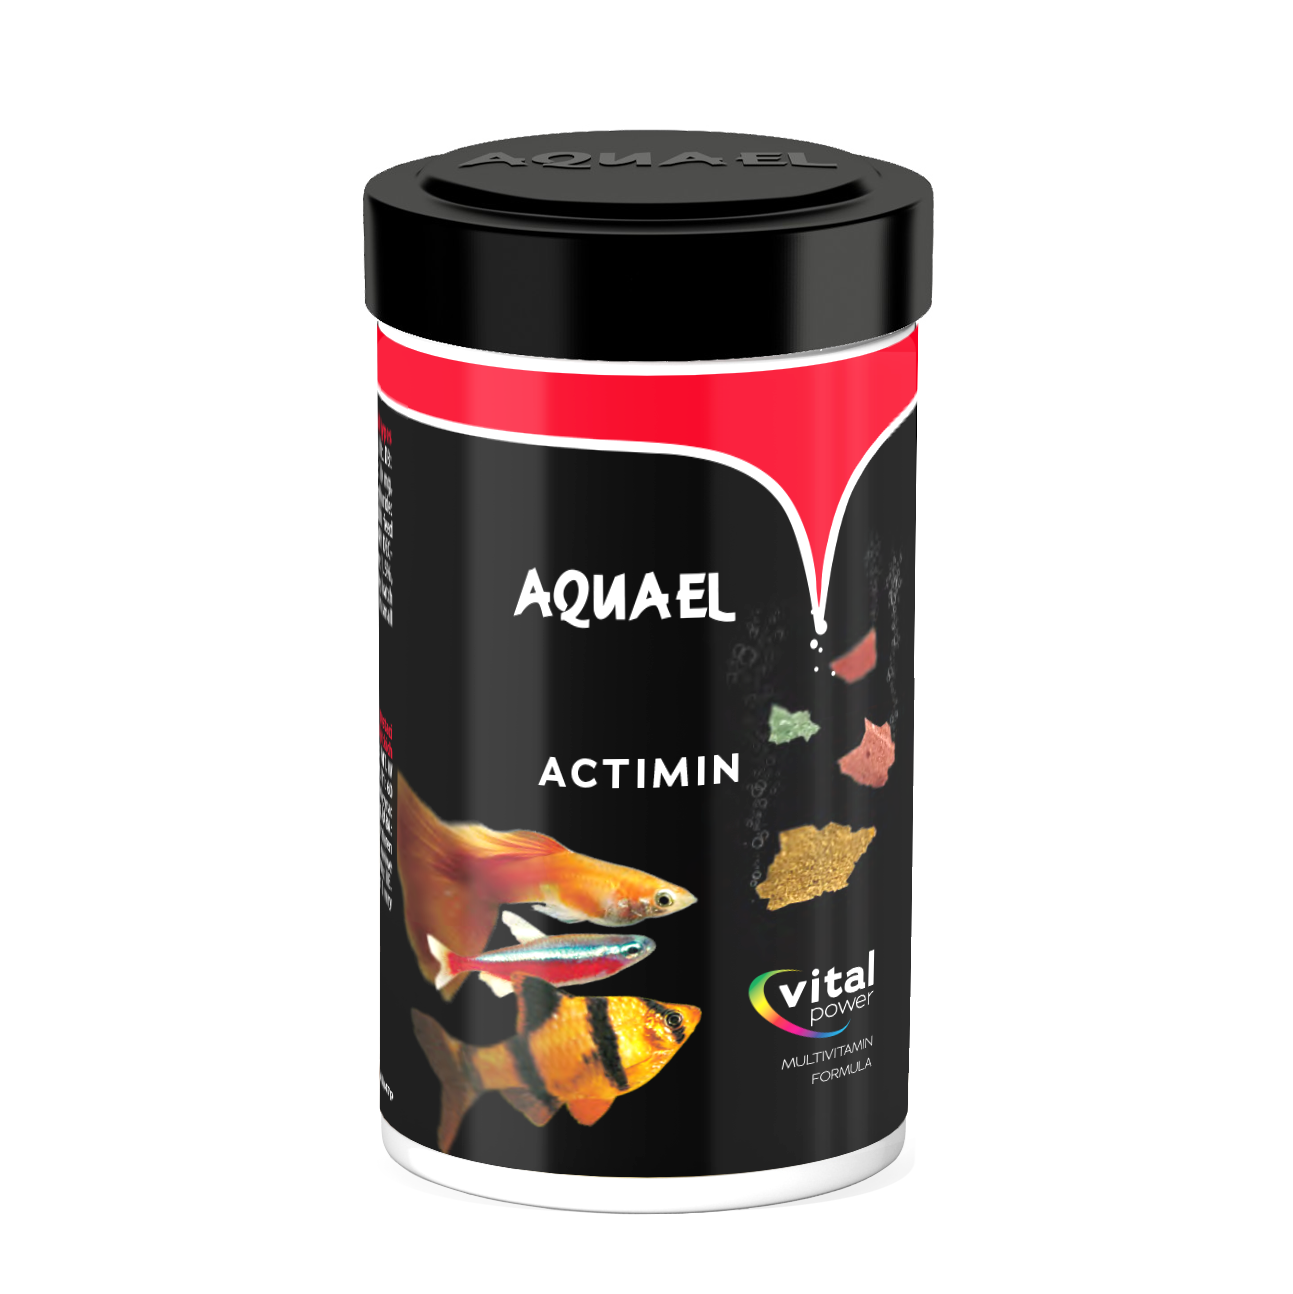 Aquael fish feed Actimin 1000ml